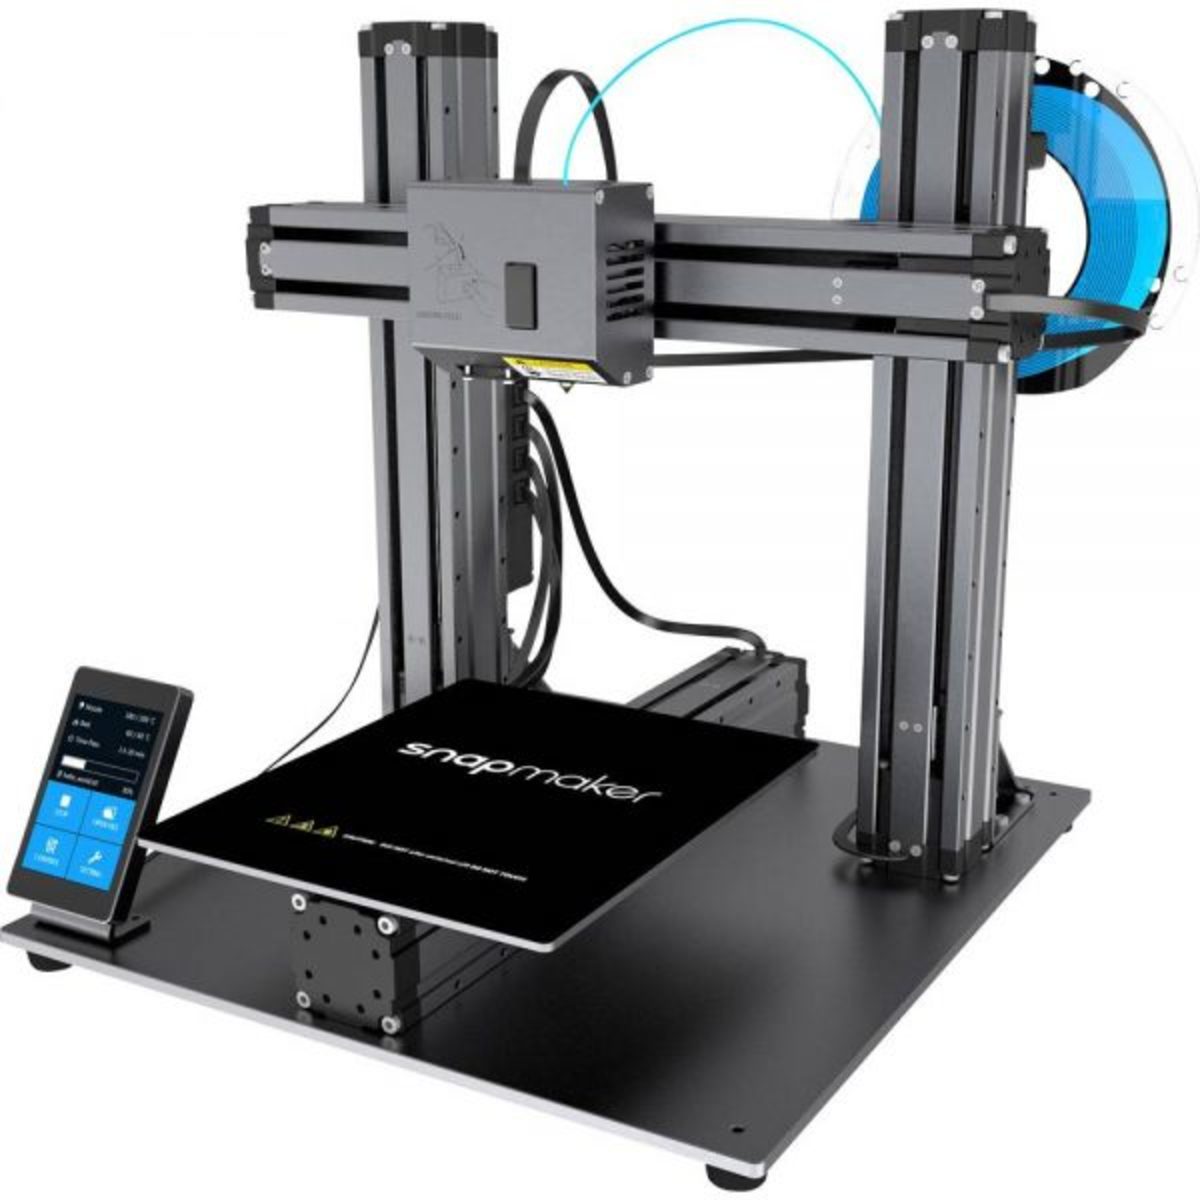 The Snapmaker 3d printer